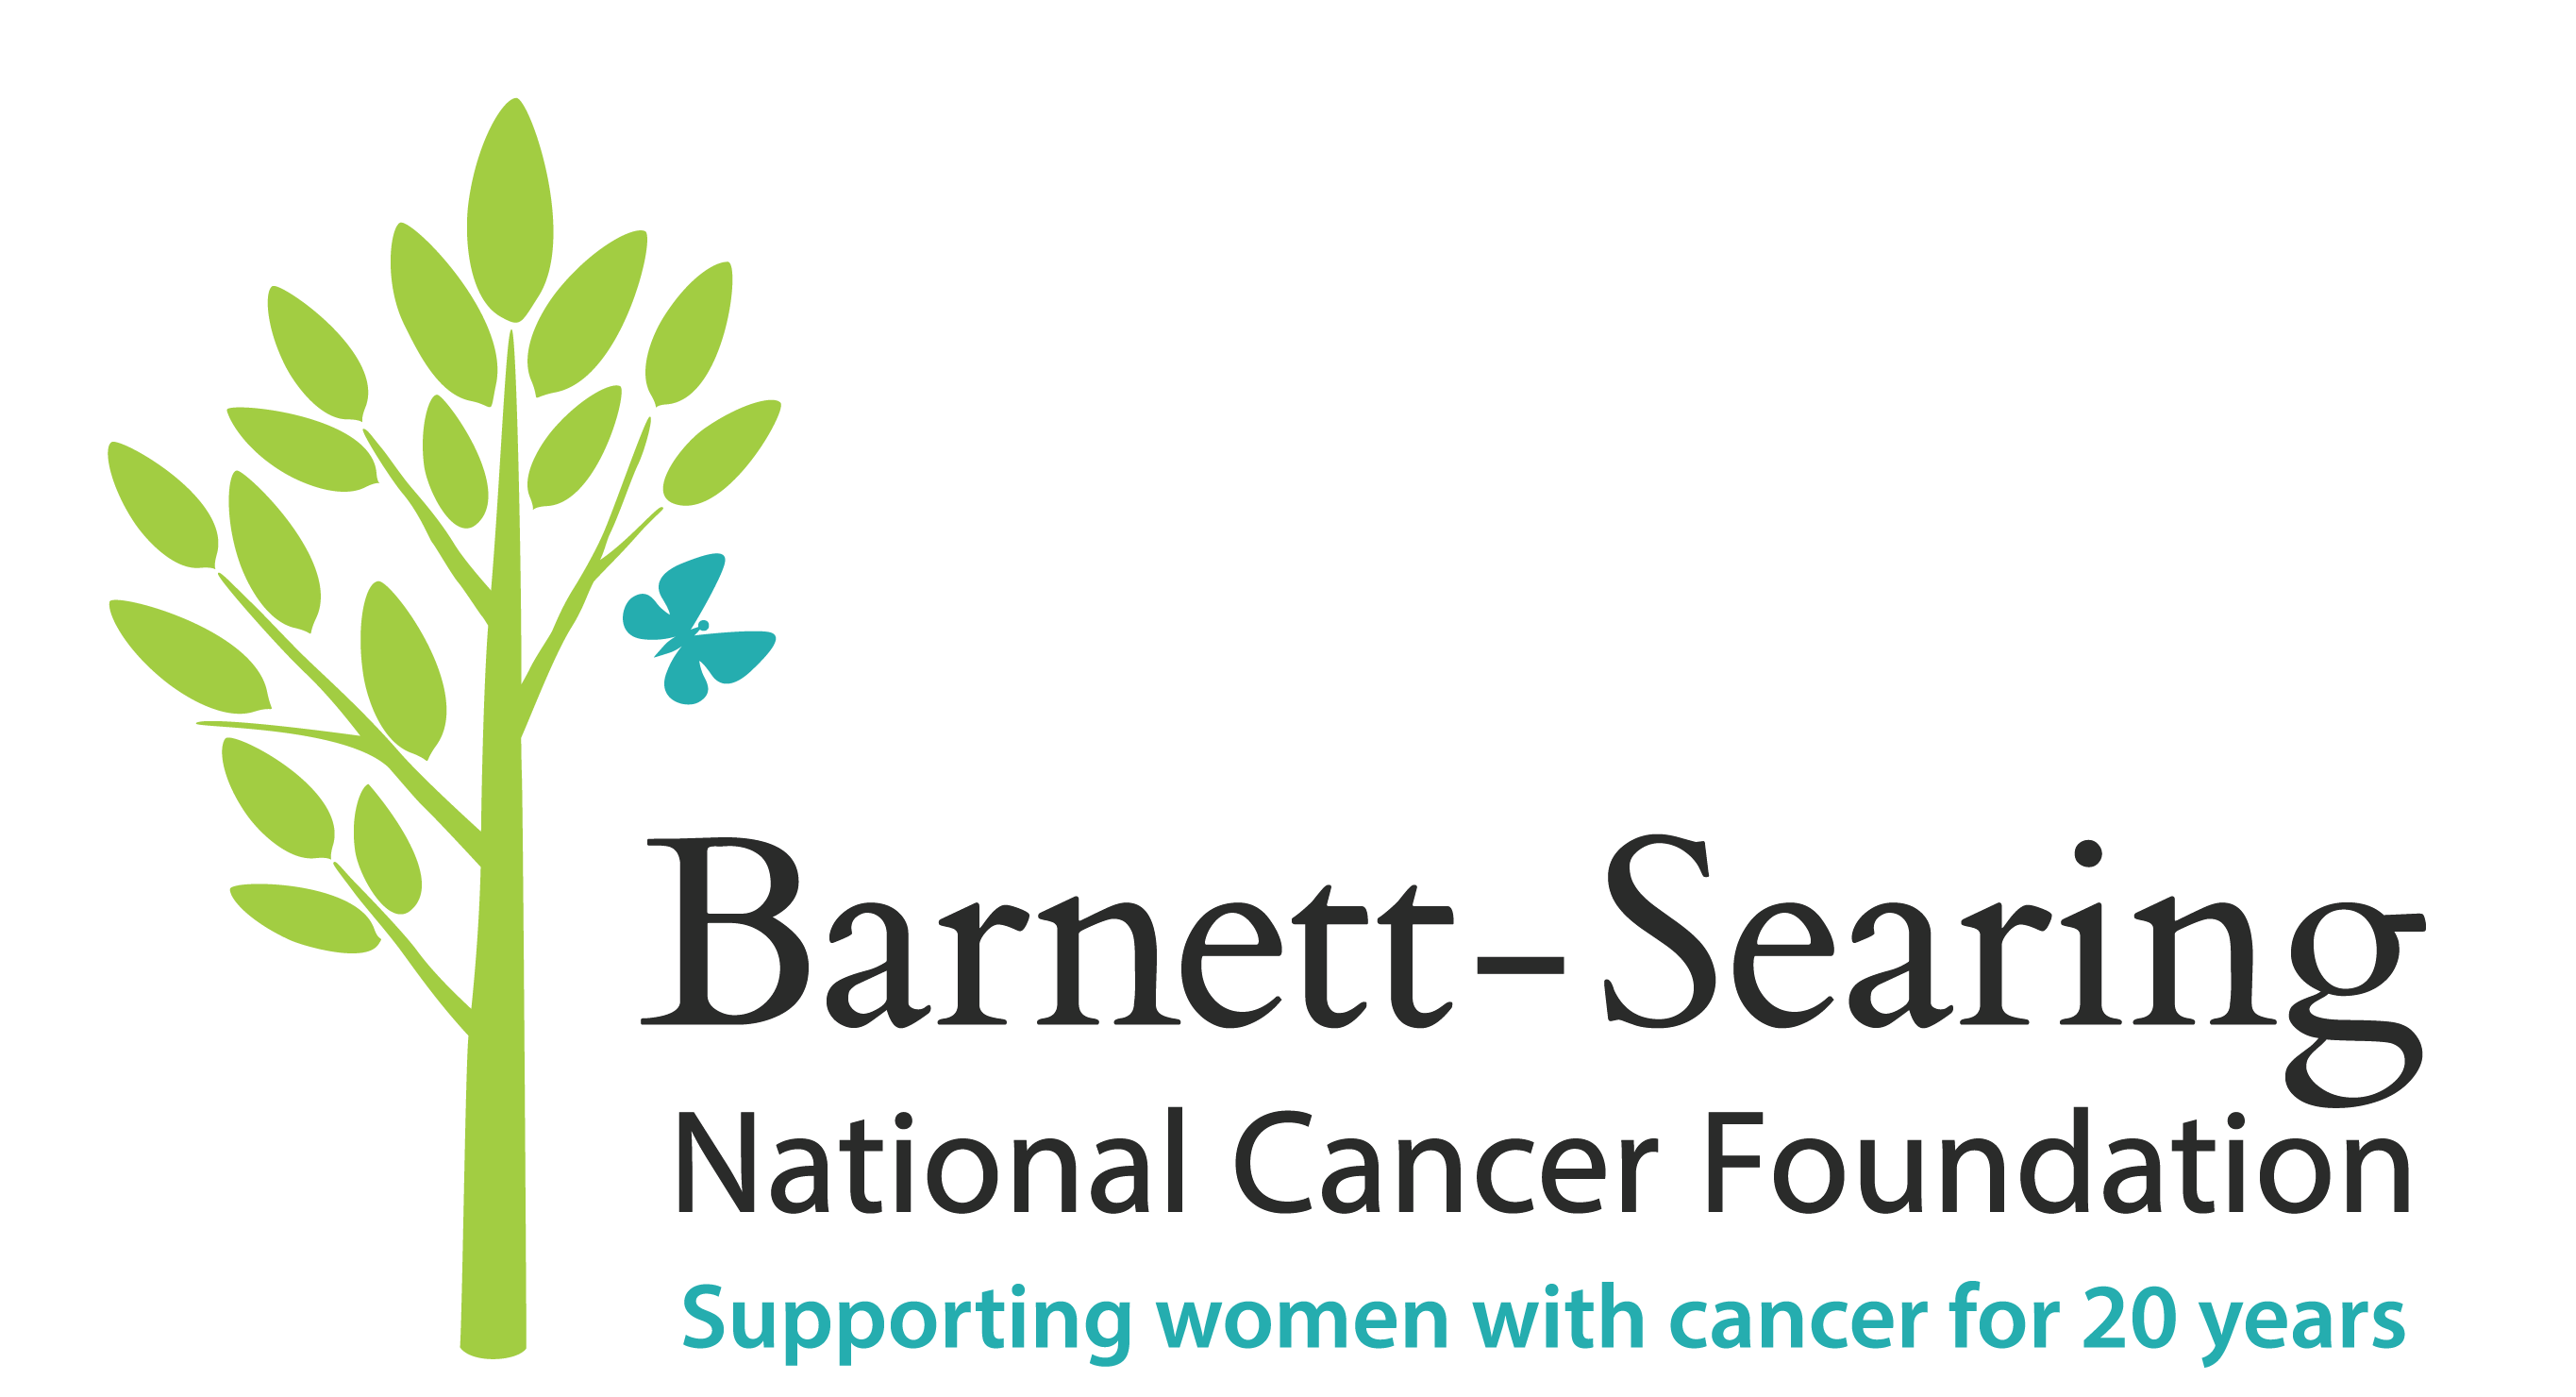 Barnett-Searing National Cancer Foundation